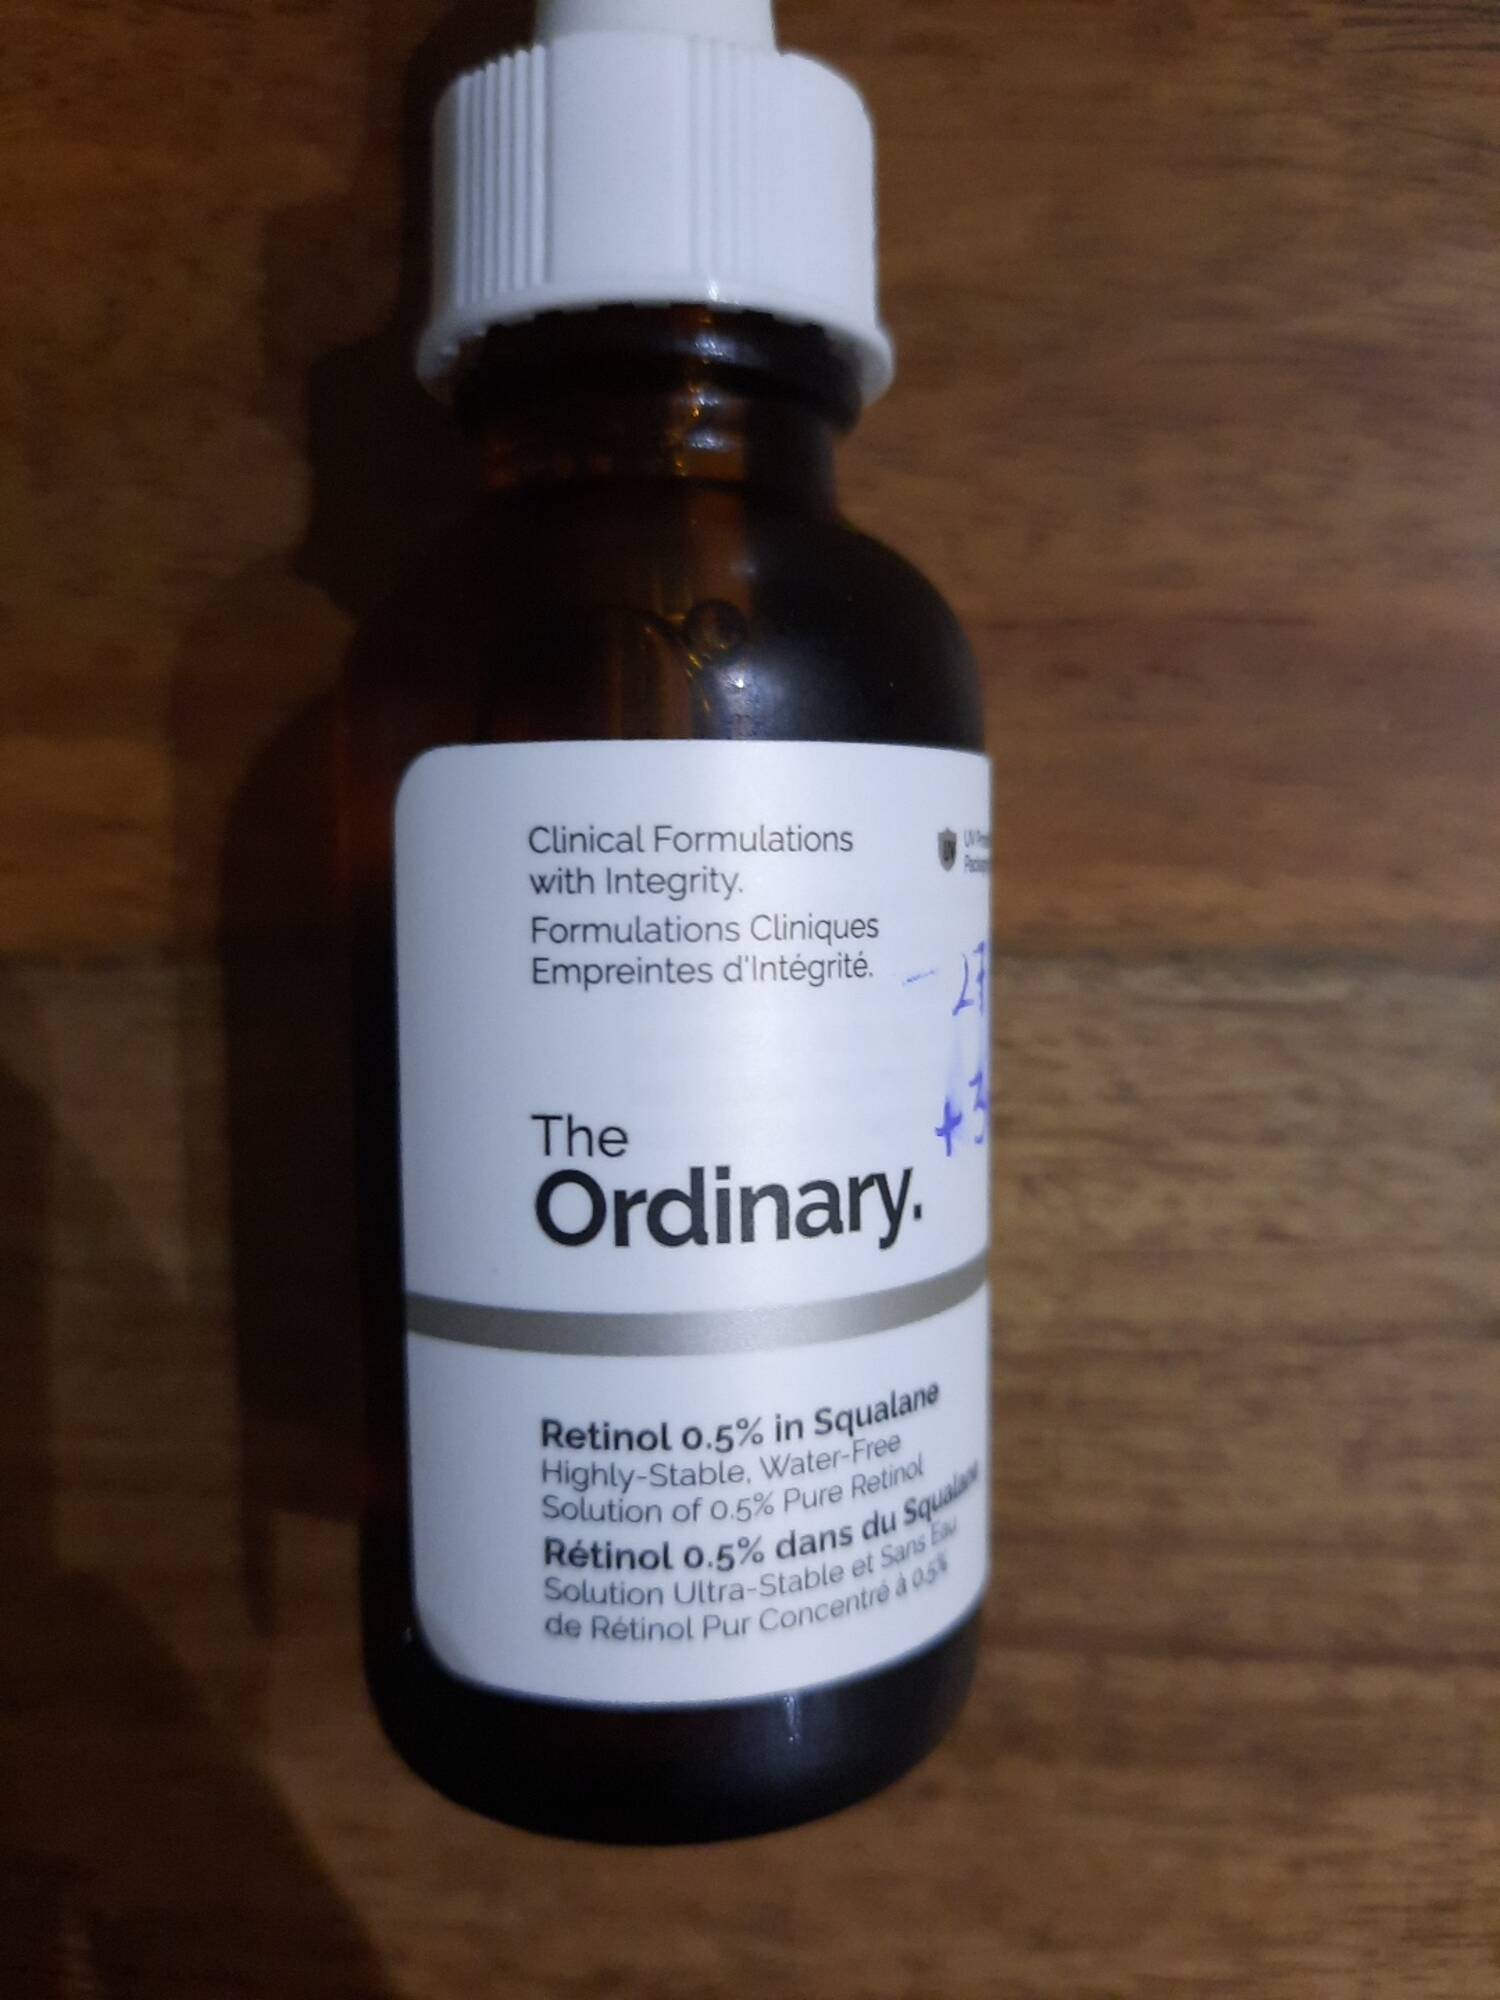 THE ORDINARY - Retinol 0.5% dans squalane